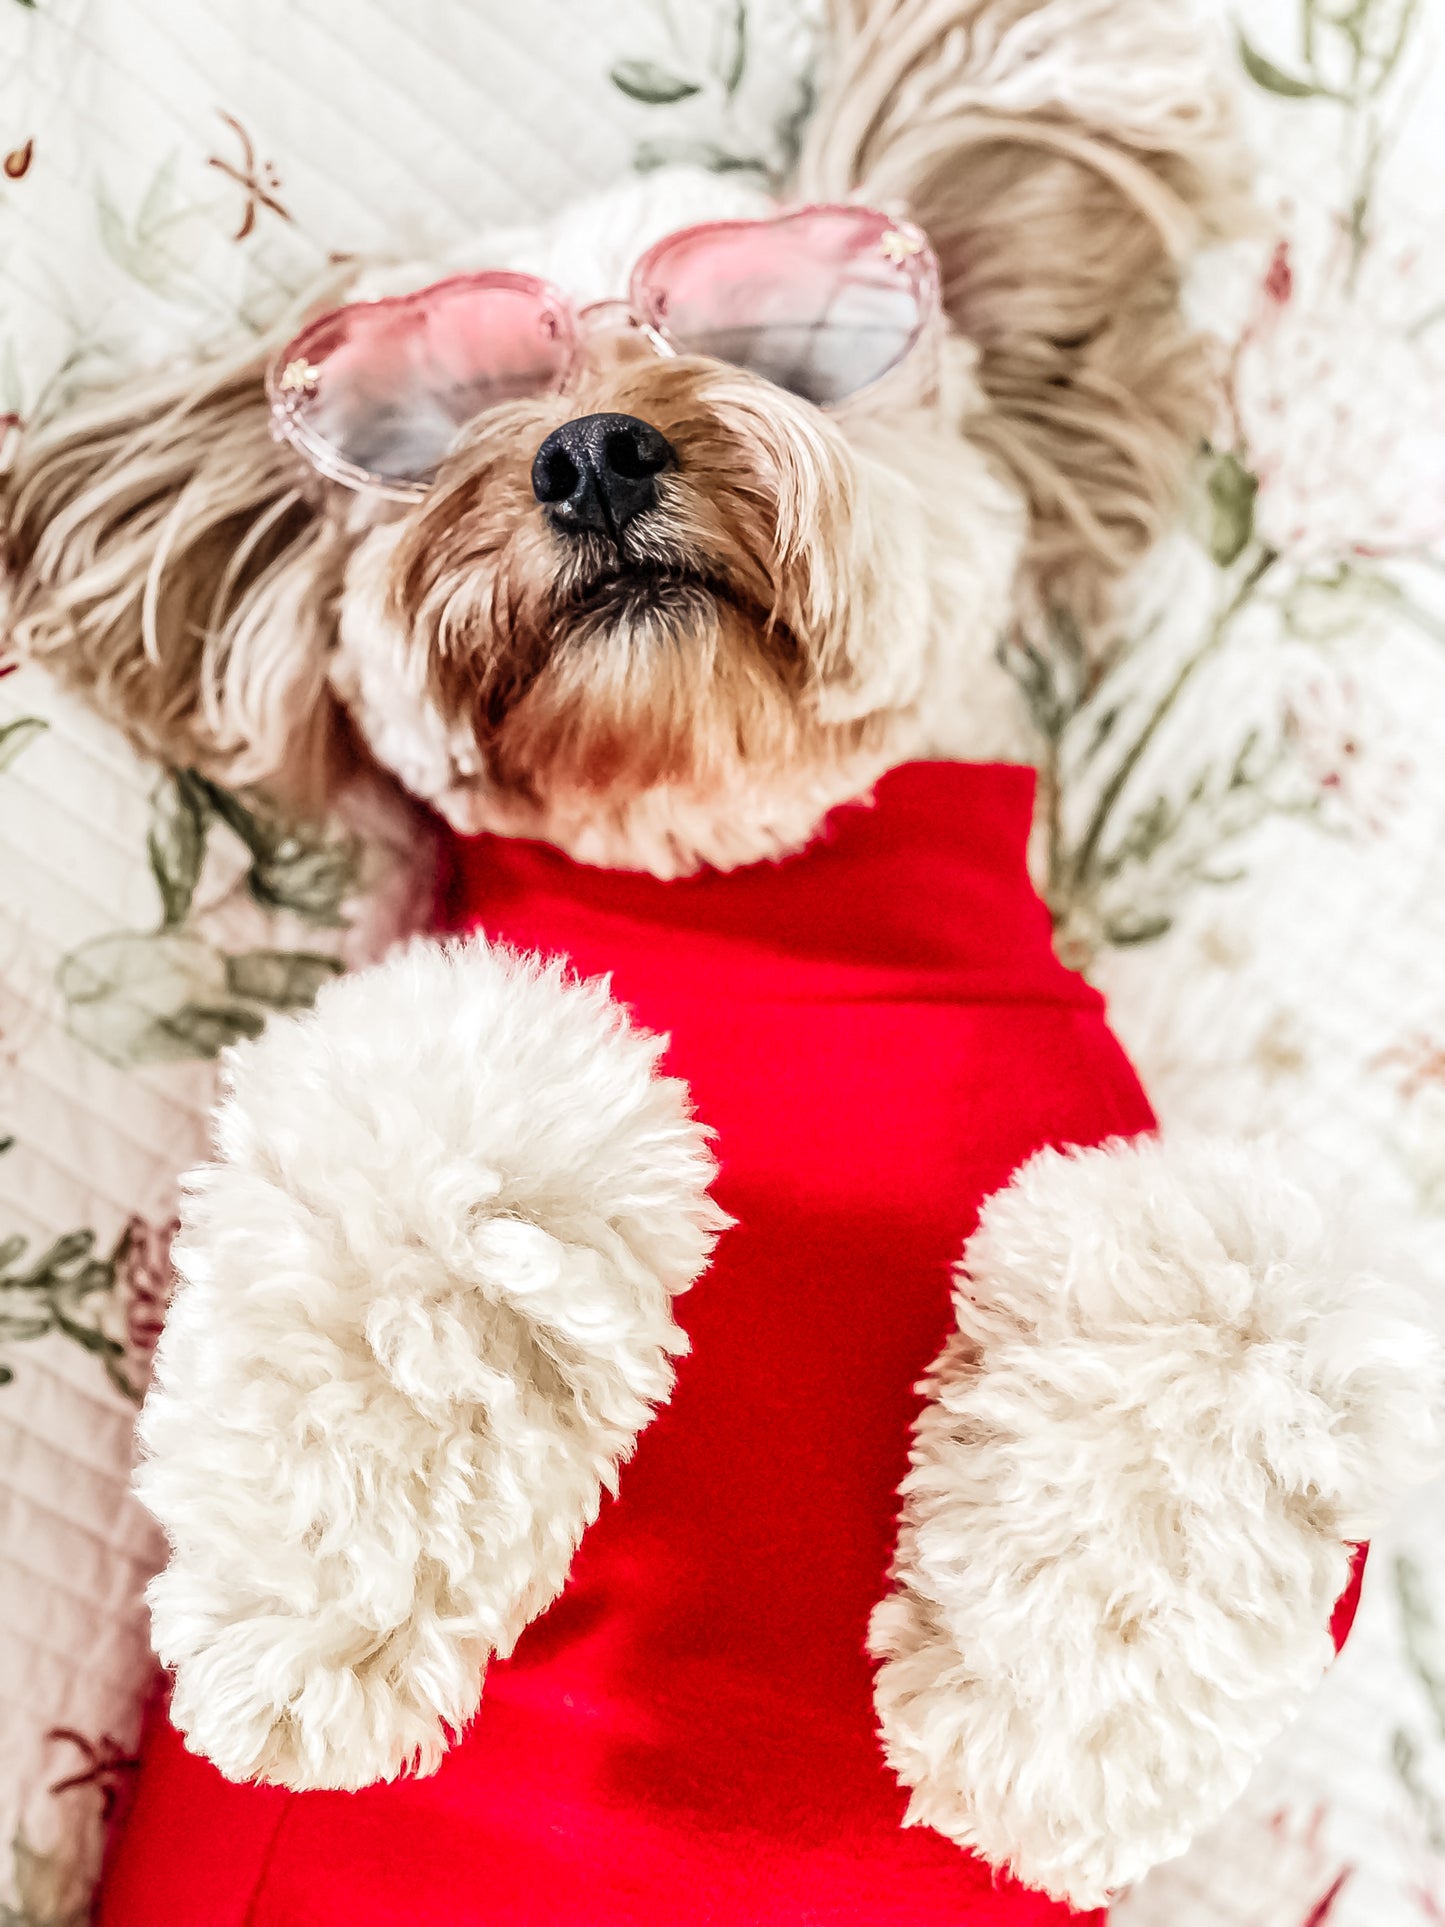 Sweetheart Shades | Four options | Pet Fashion Sunglasses